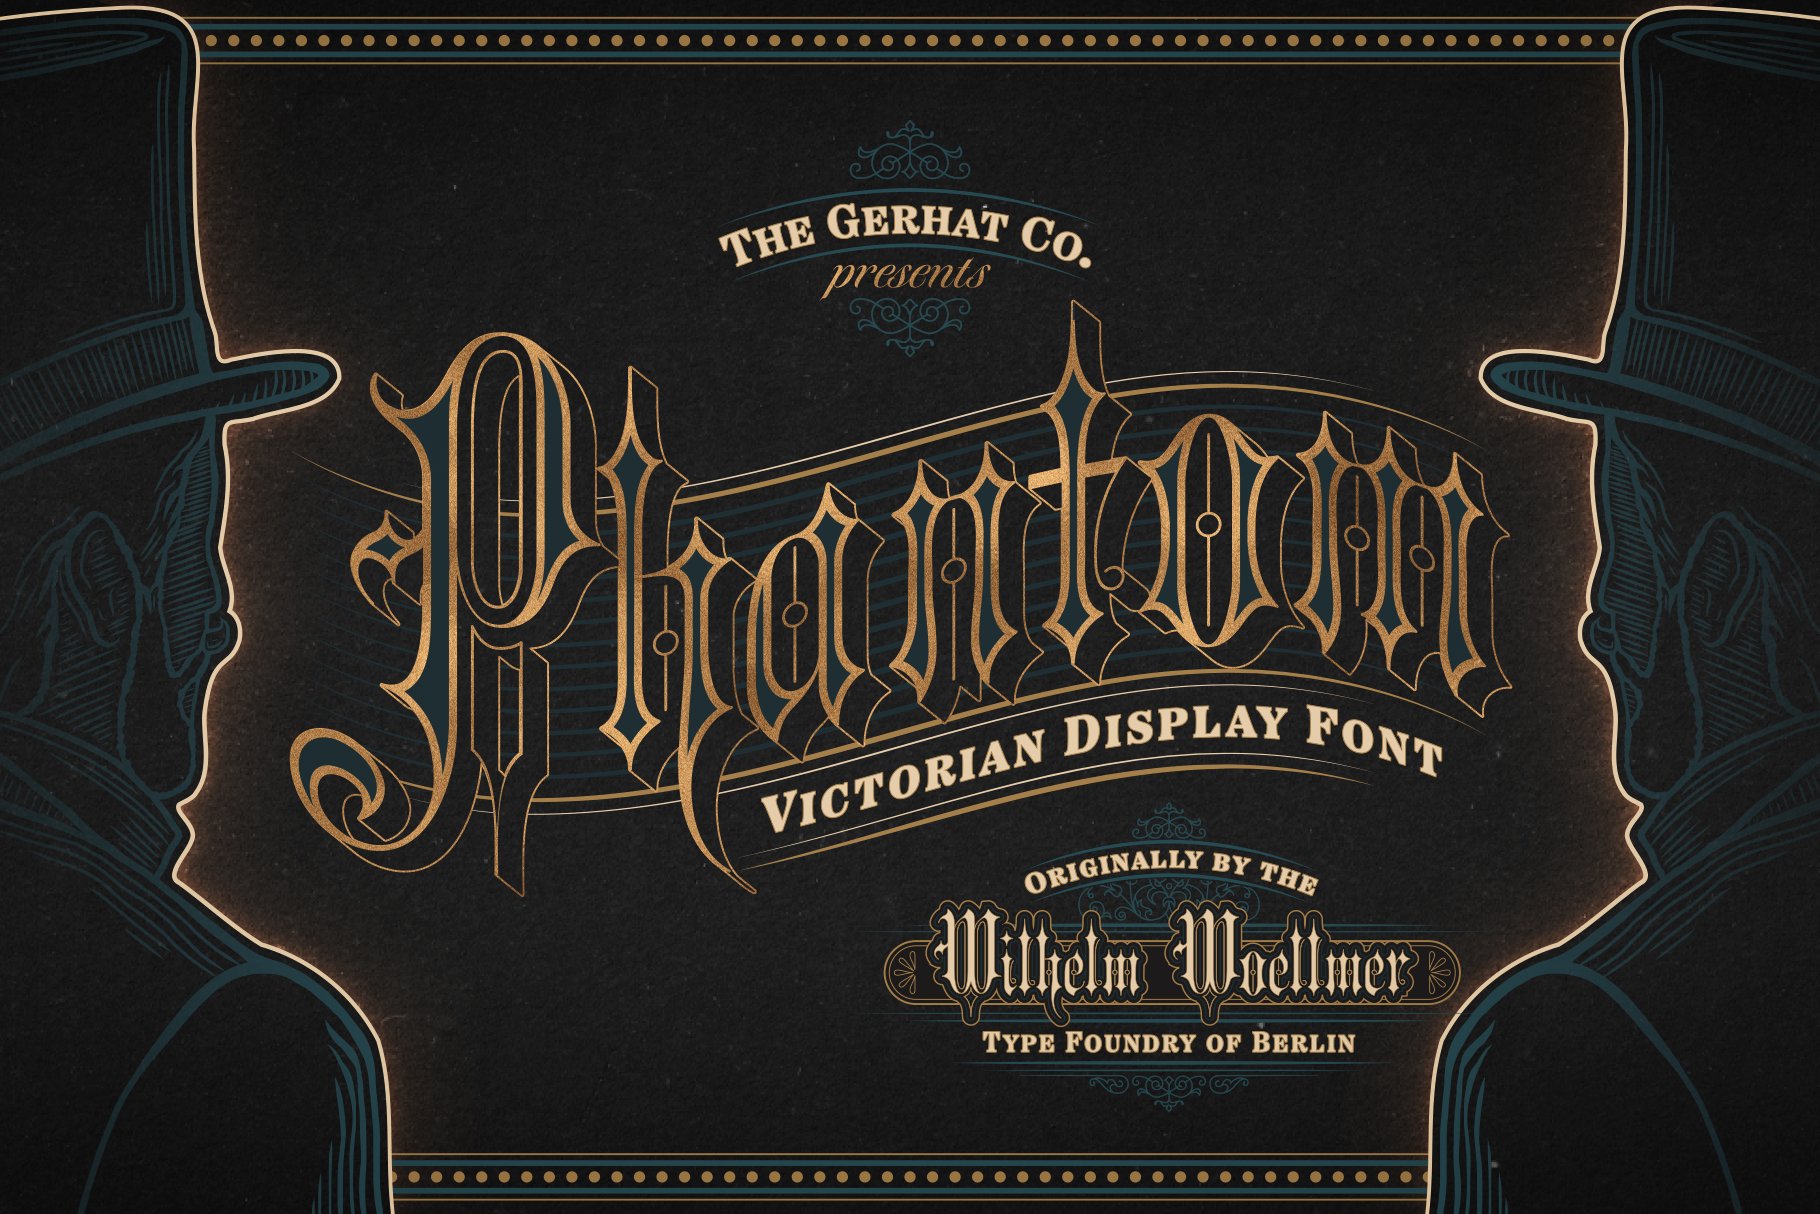 Phantom Victorian Display Font cover image.